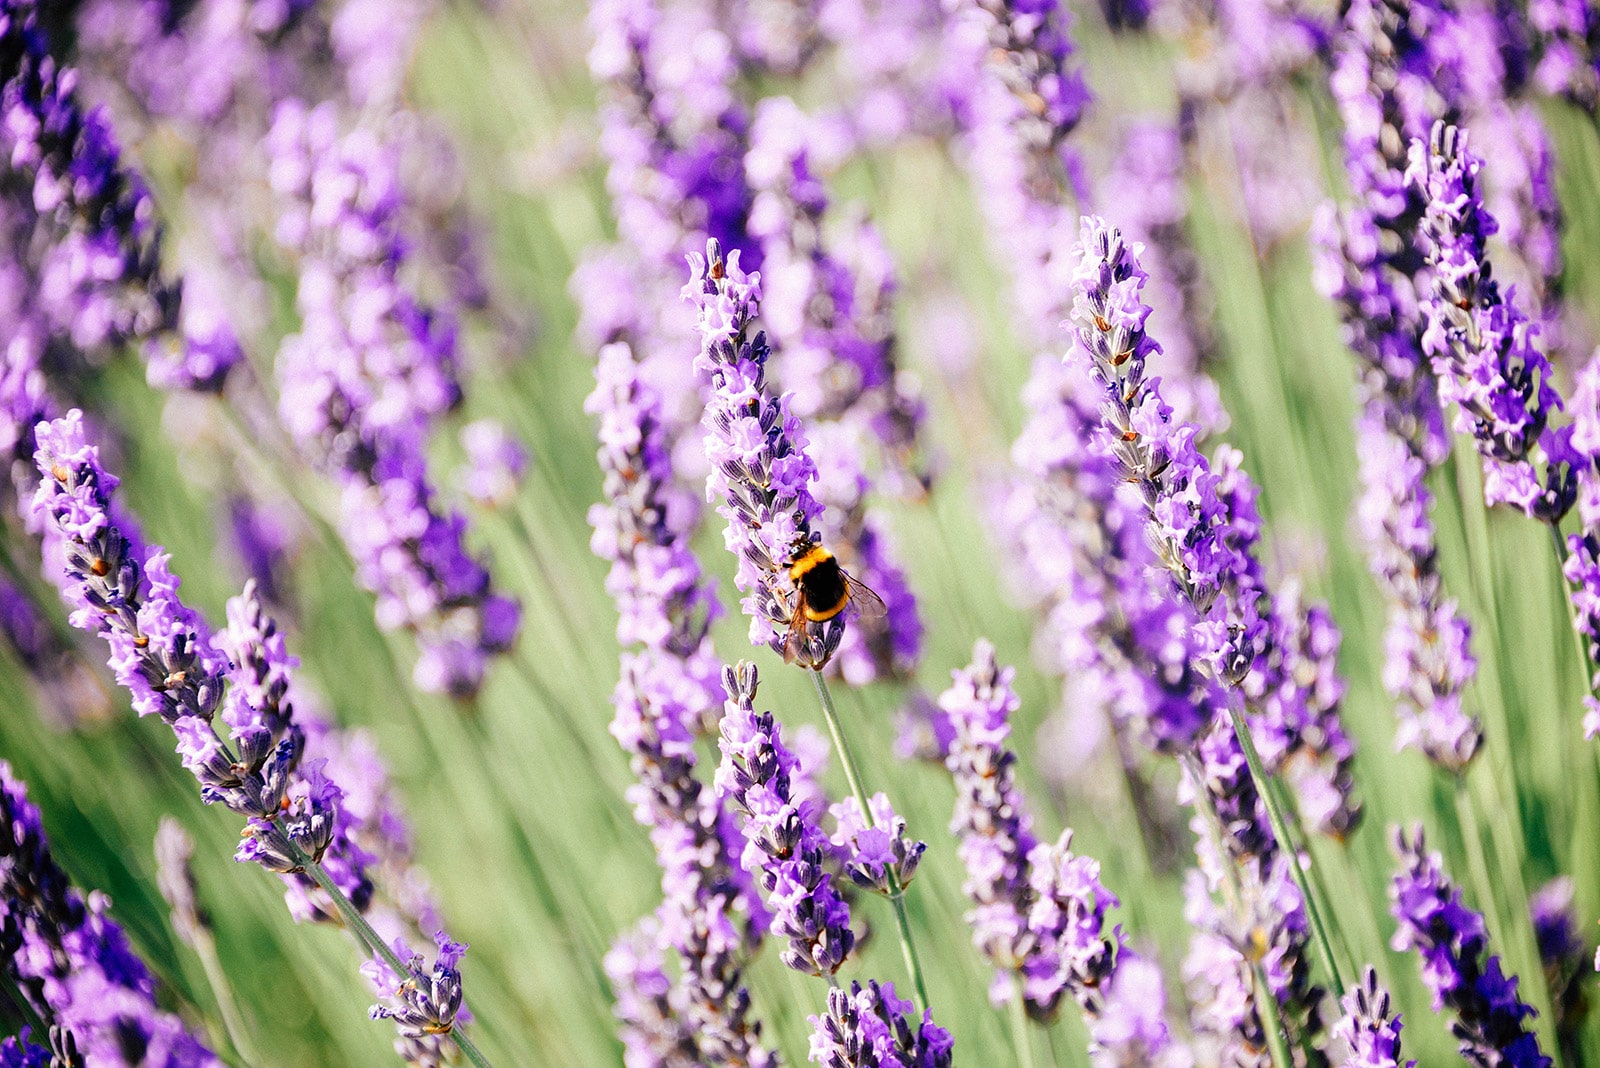 Bee landing on a lavender flower